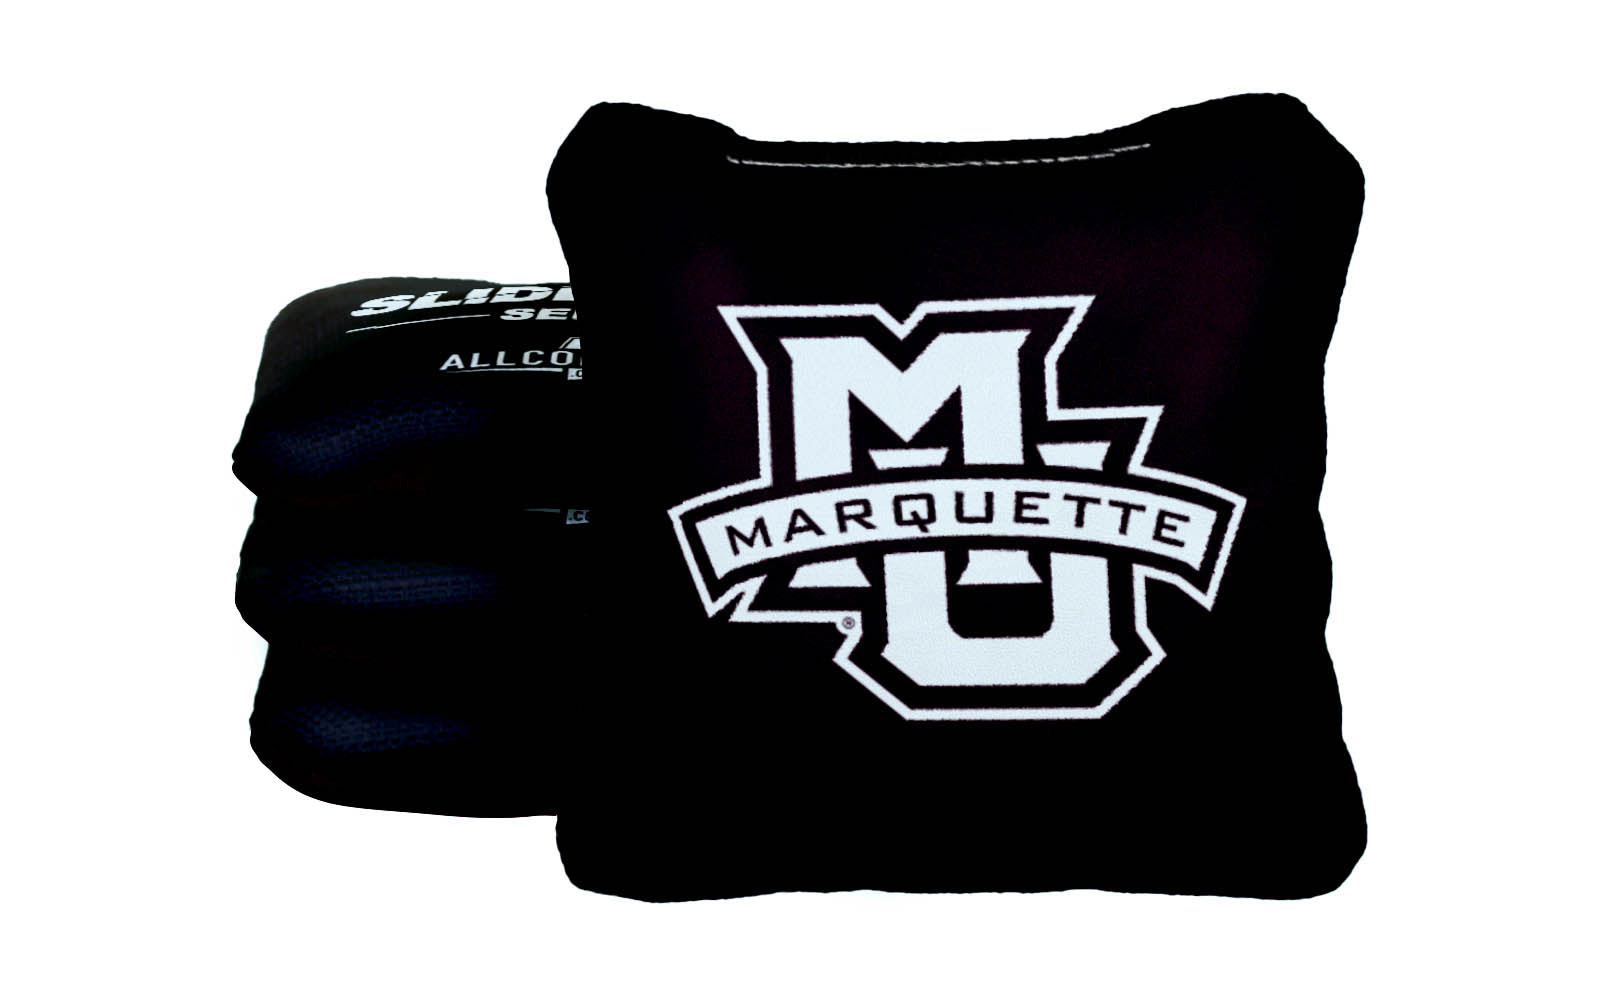 Officially Licensed Collegiate Cornhole Bags - AllCornhole Slide Rite - Set of 4 - Marquette University